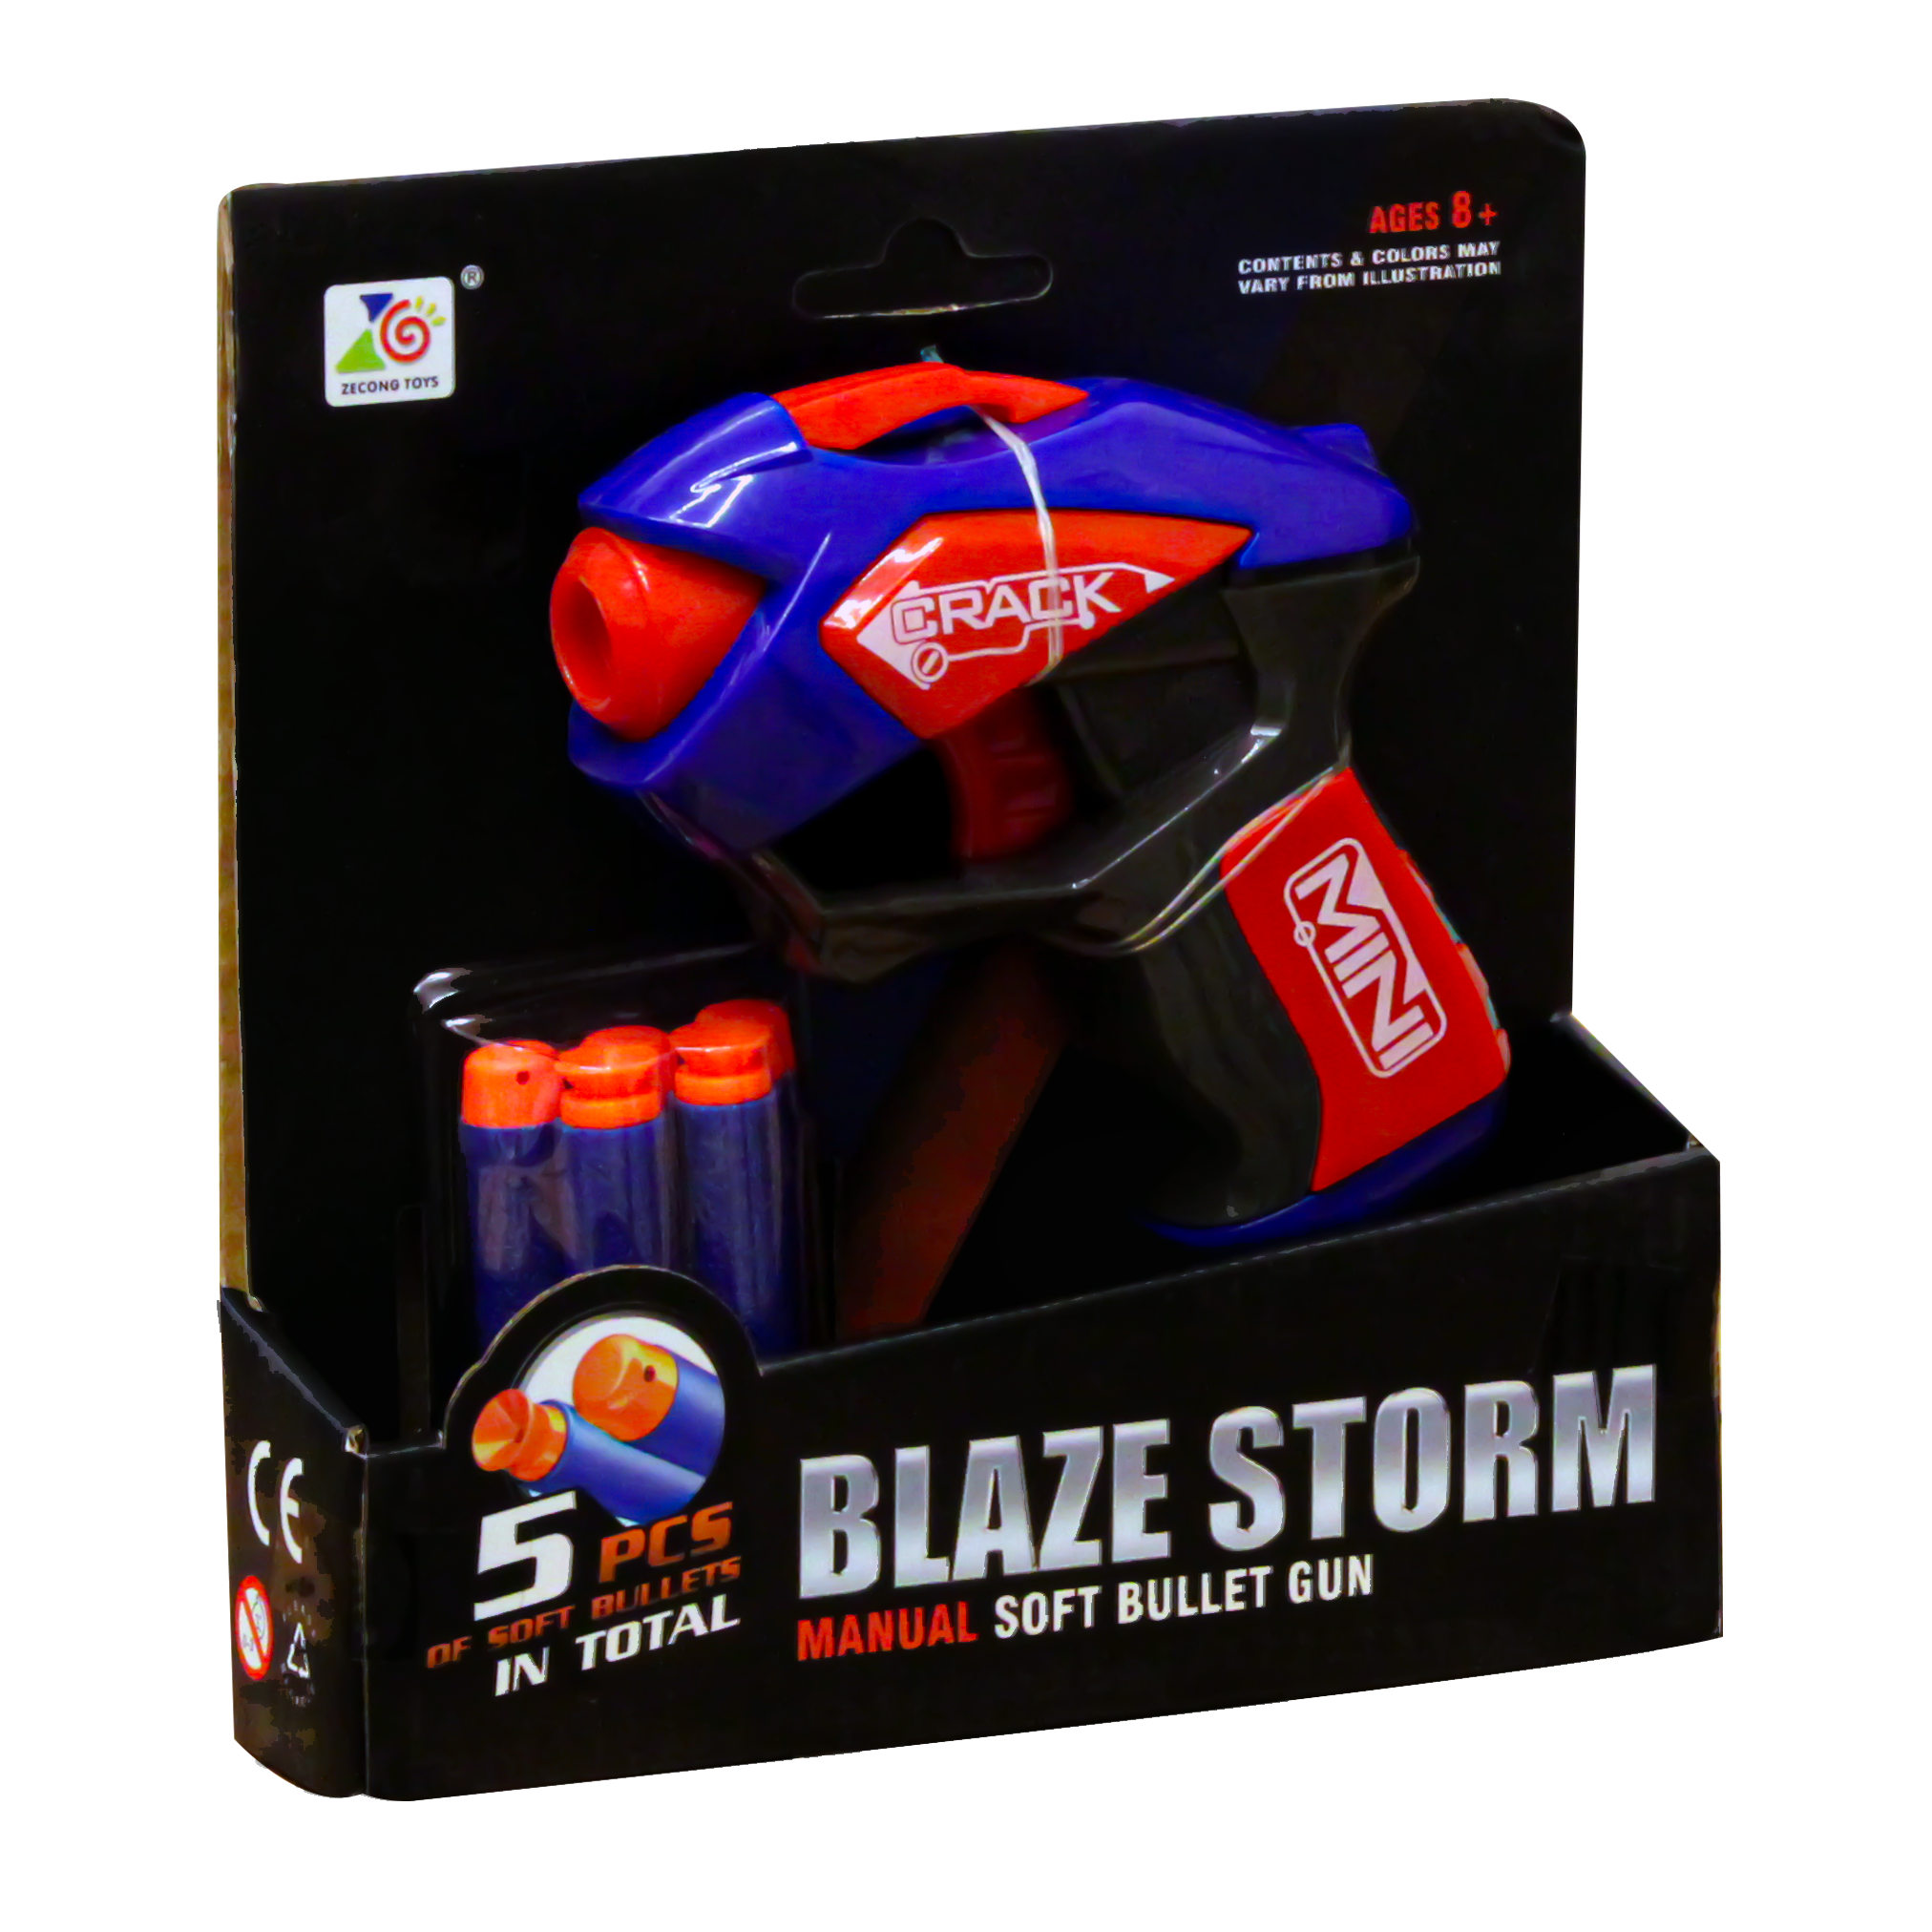 Blaze Storm - Manual Soft Bullet Gun